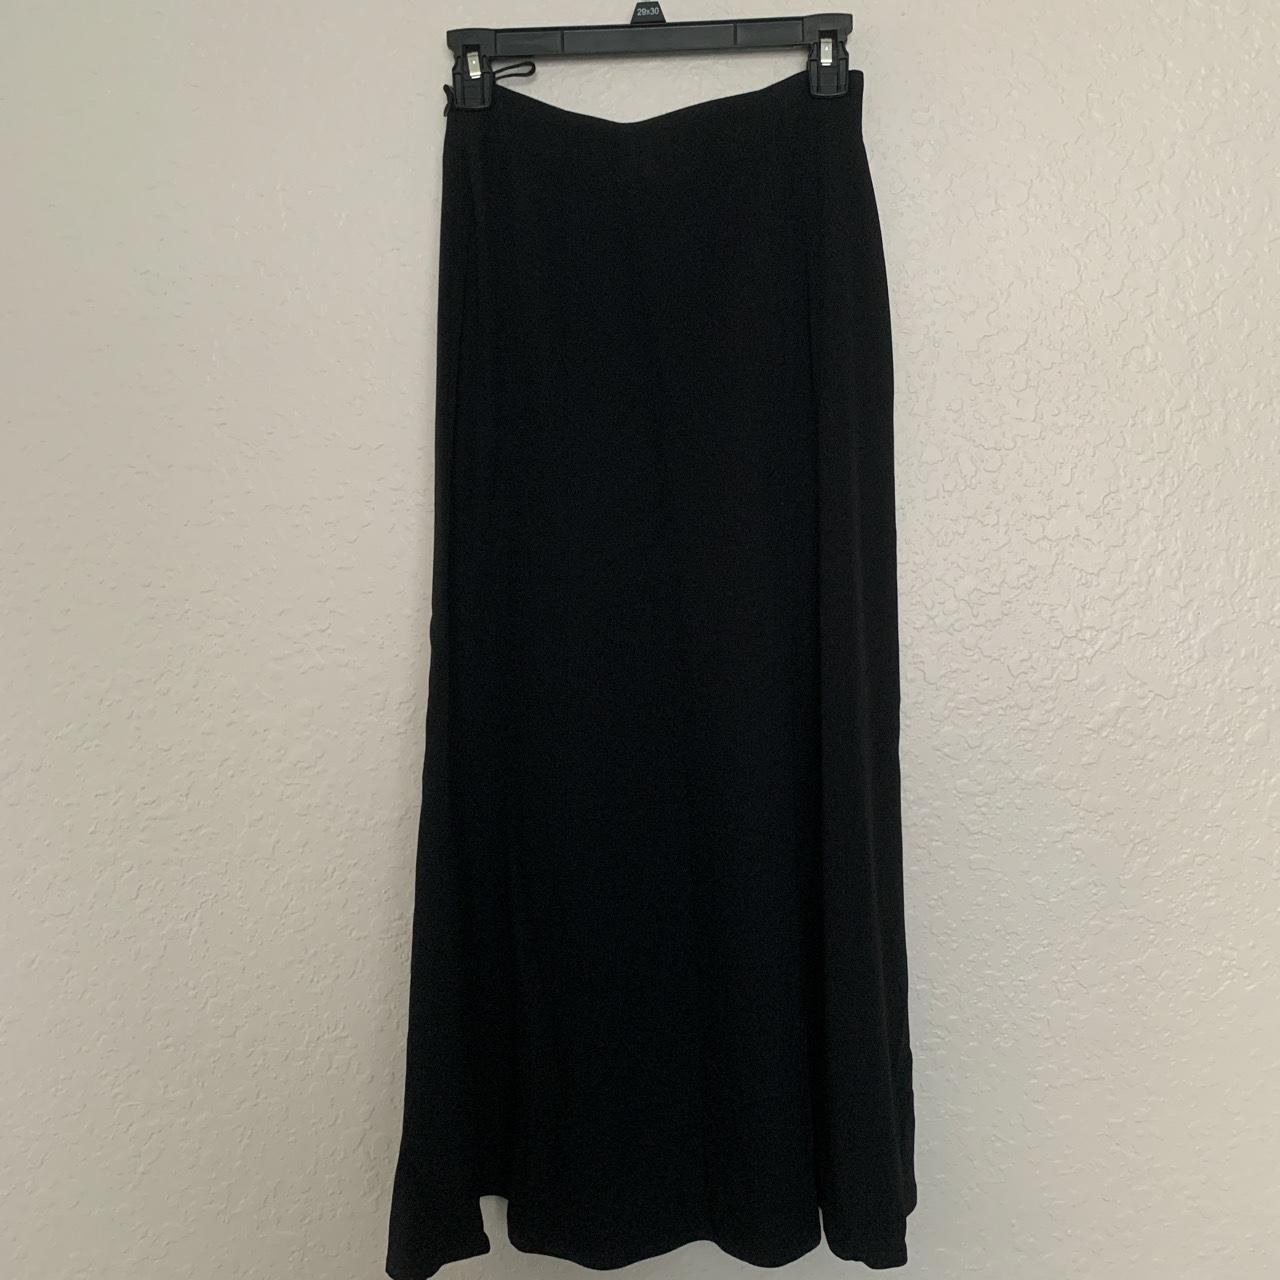 Vintage 90”s Moschino black skirt with cross cross... - Depop